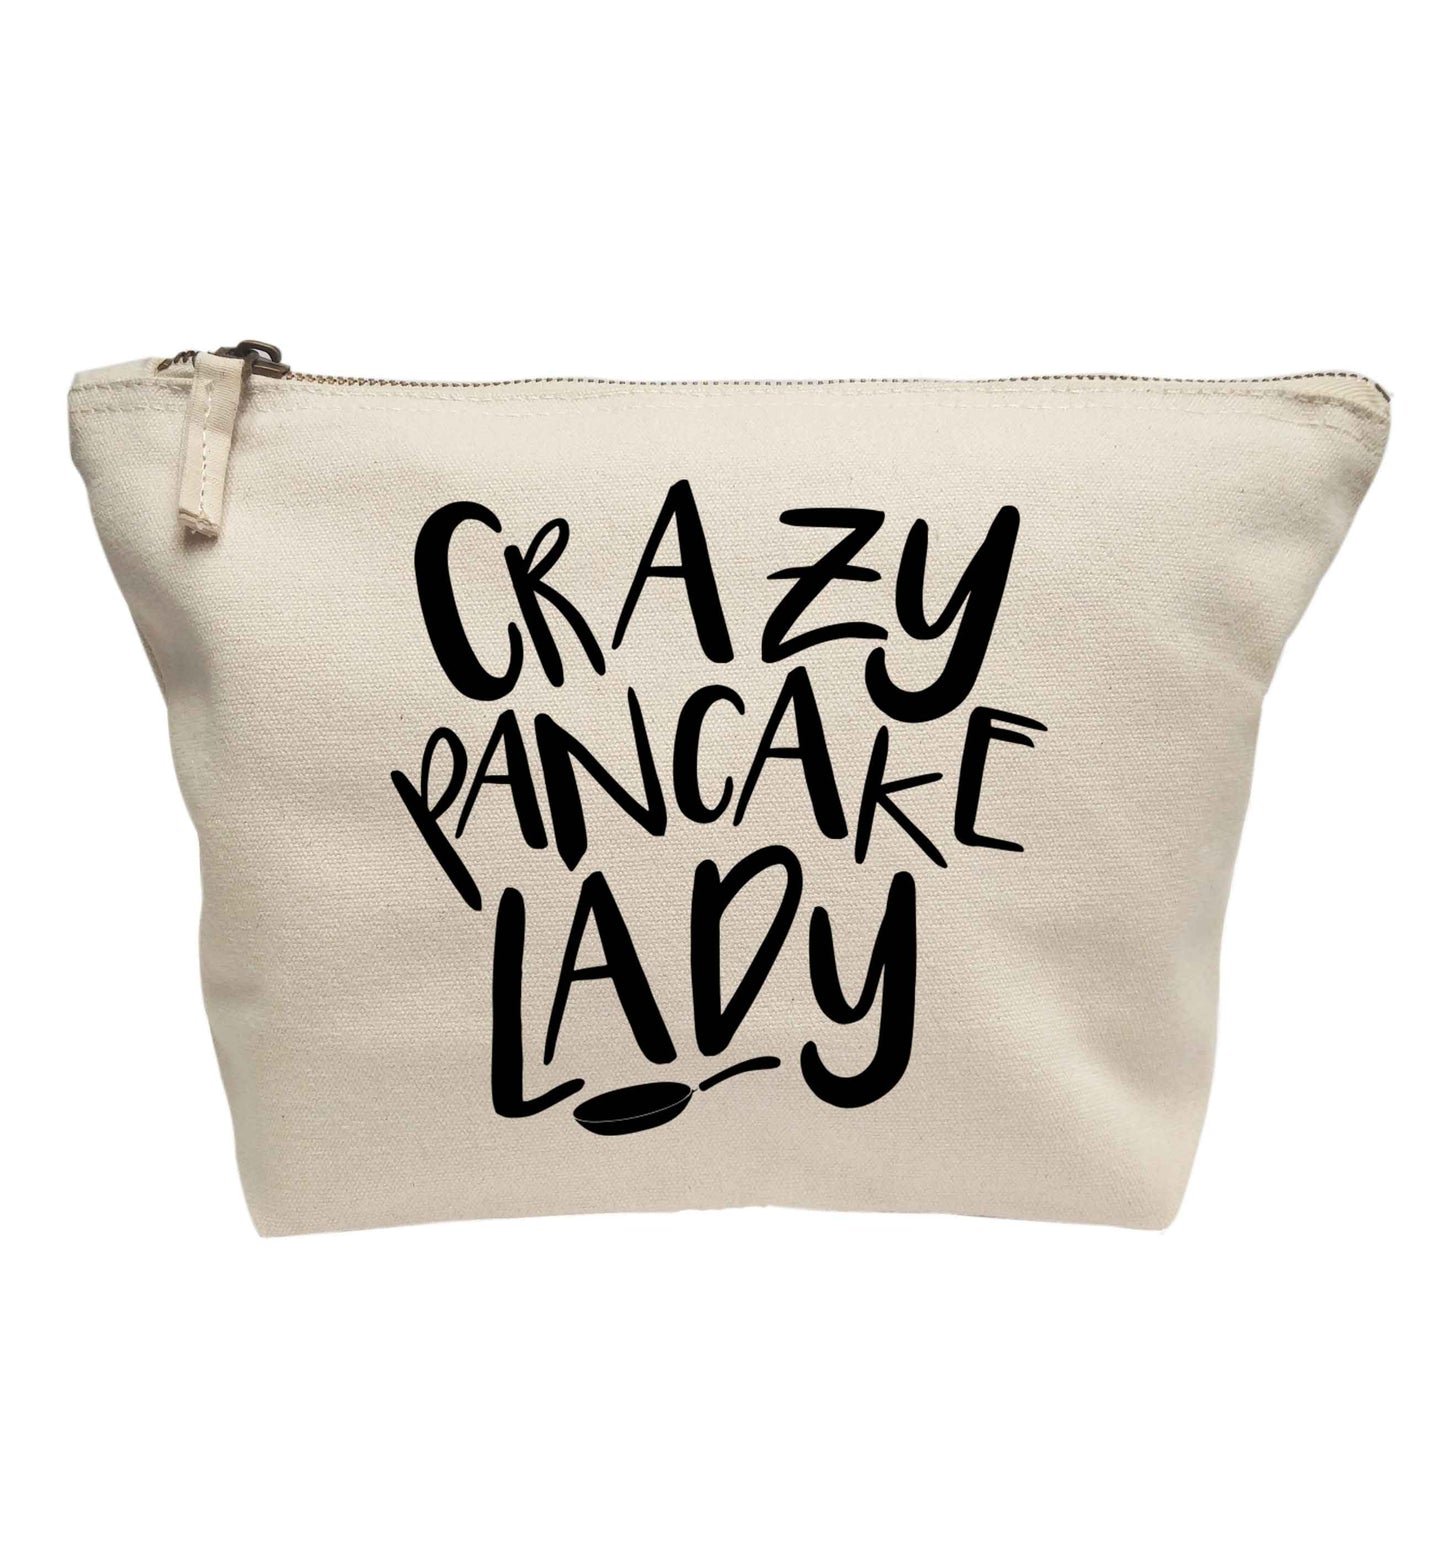 Crazy pancake lady | Makeup / wash bag